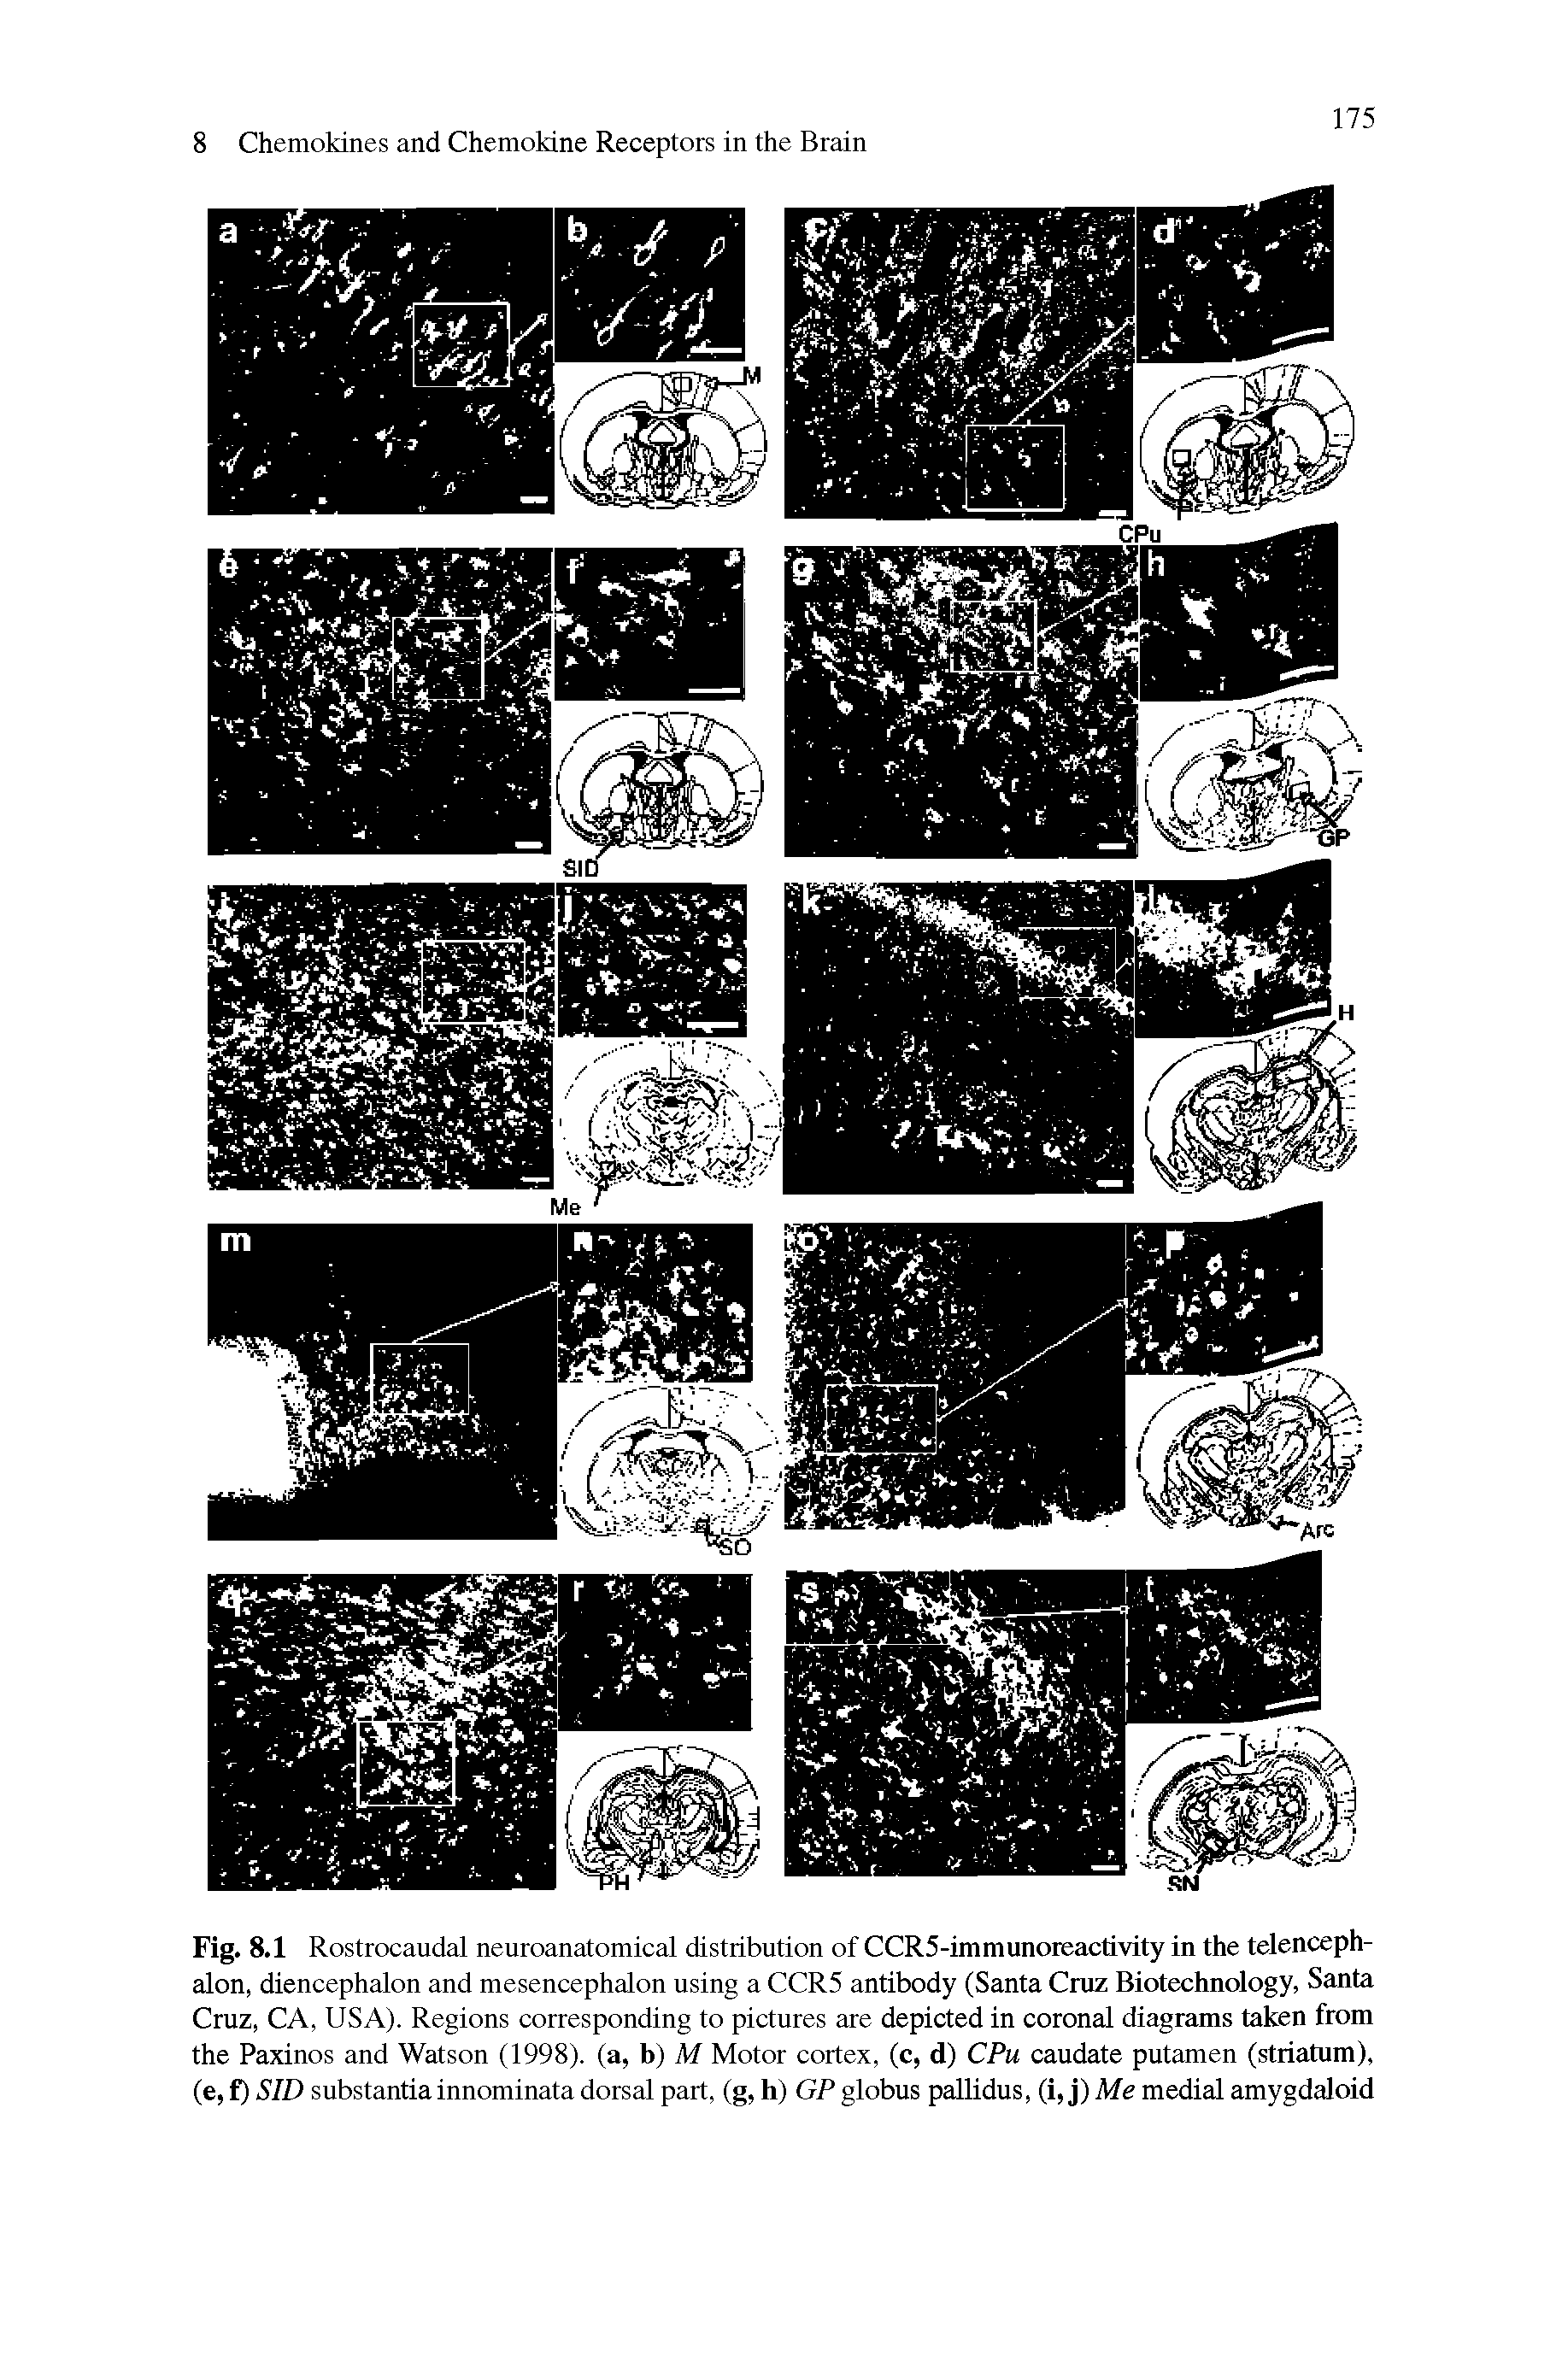 Fig. 8.1 Rostrocaudal neuroanatomical distribution of CCR5-immunoreactivity in the telencephalon, diencephalon and mesencephalon using a CCR5 antibody (Santa Cruz Biotechnology, Santa Cruz, CA, USA). Regions corresponding to pictures are depicted in coronal diagrams taken from the Paxinos and Watson (1998). (a, b) M Motor cortex, (c, d) CPu caudate putamen (striatum), (e,t)SID substantia innominata dorsal part, (g, h) GP globus pallidus, (i, j)Me medial amygdaloid...